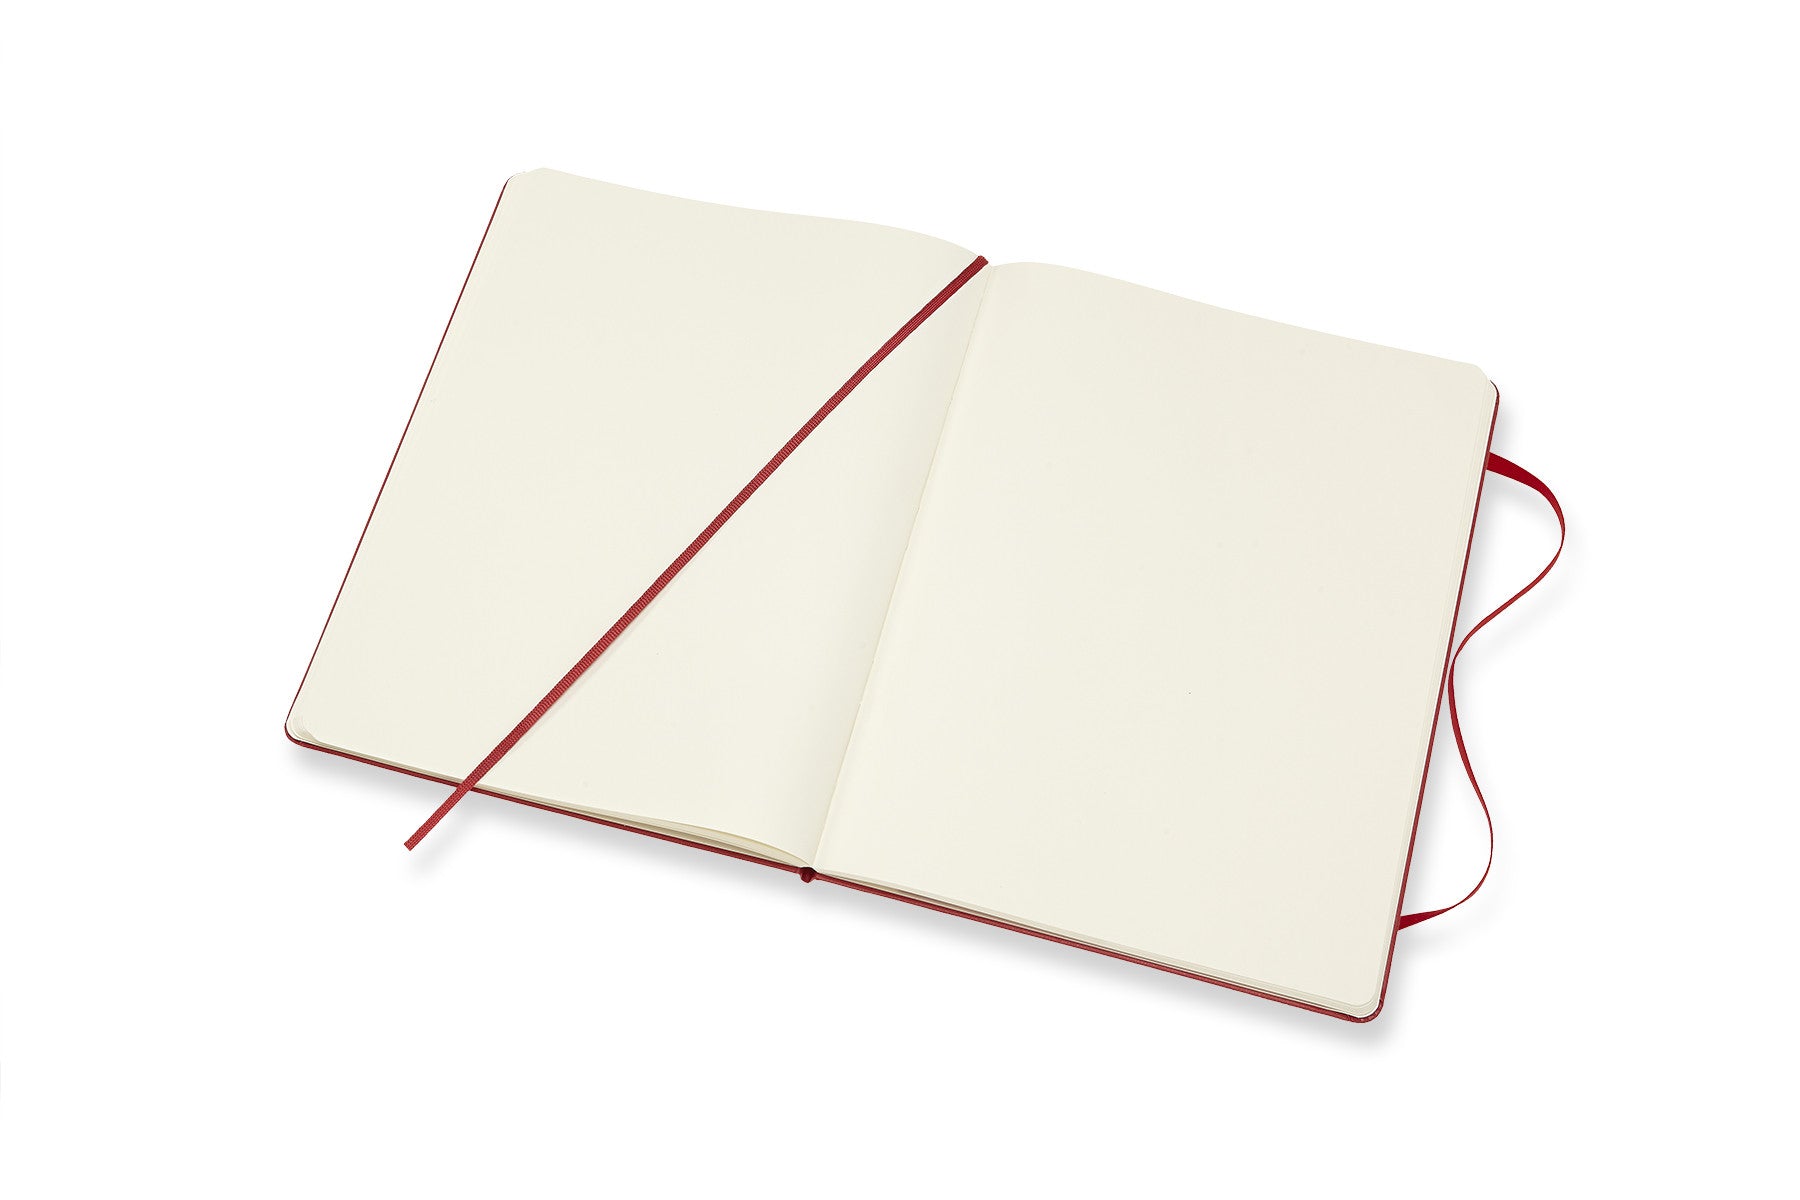 Moleskine notebook hardcover x-large plain red